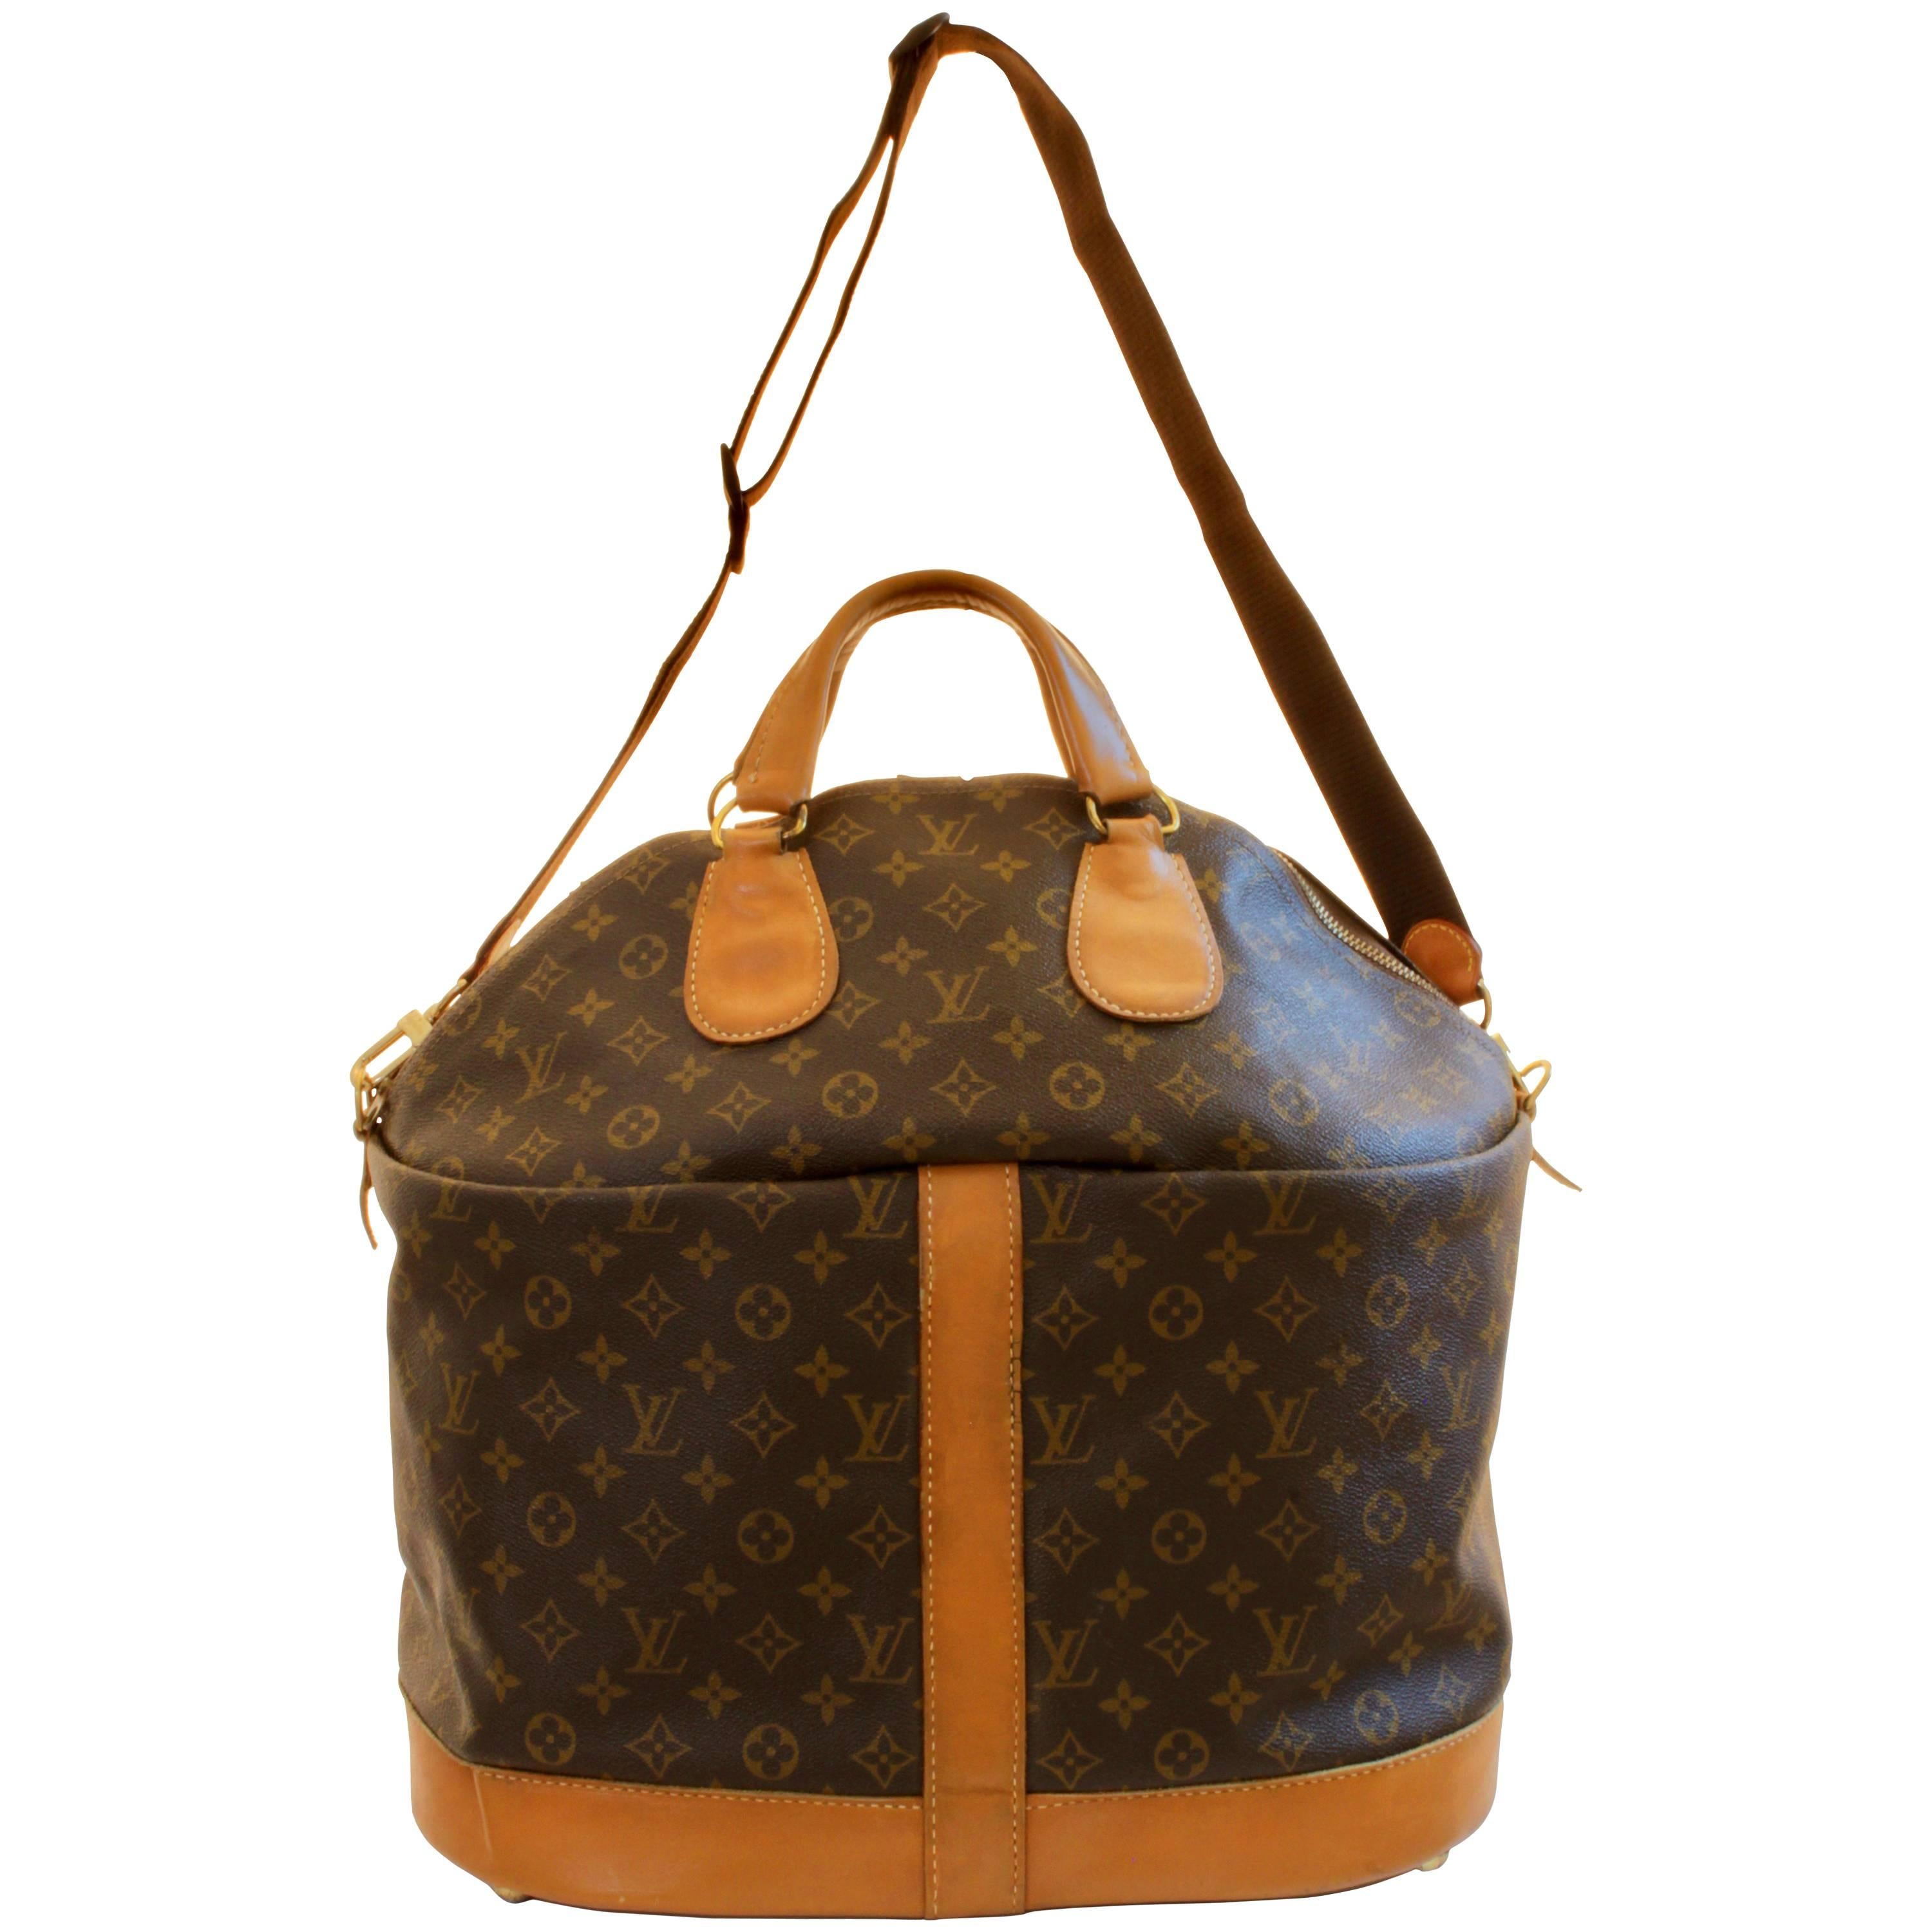 1980s Louis Vuitton Keepall Duffel Bag, For Saks